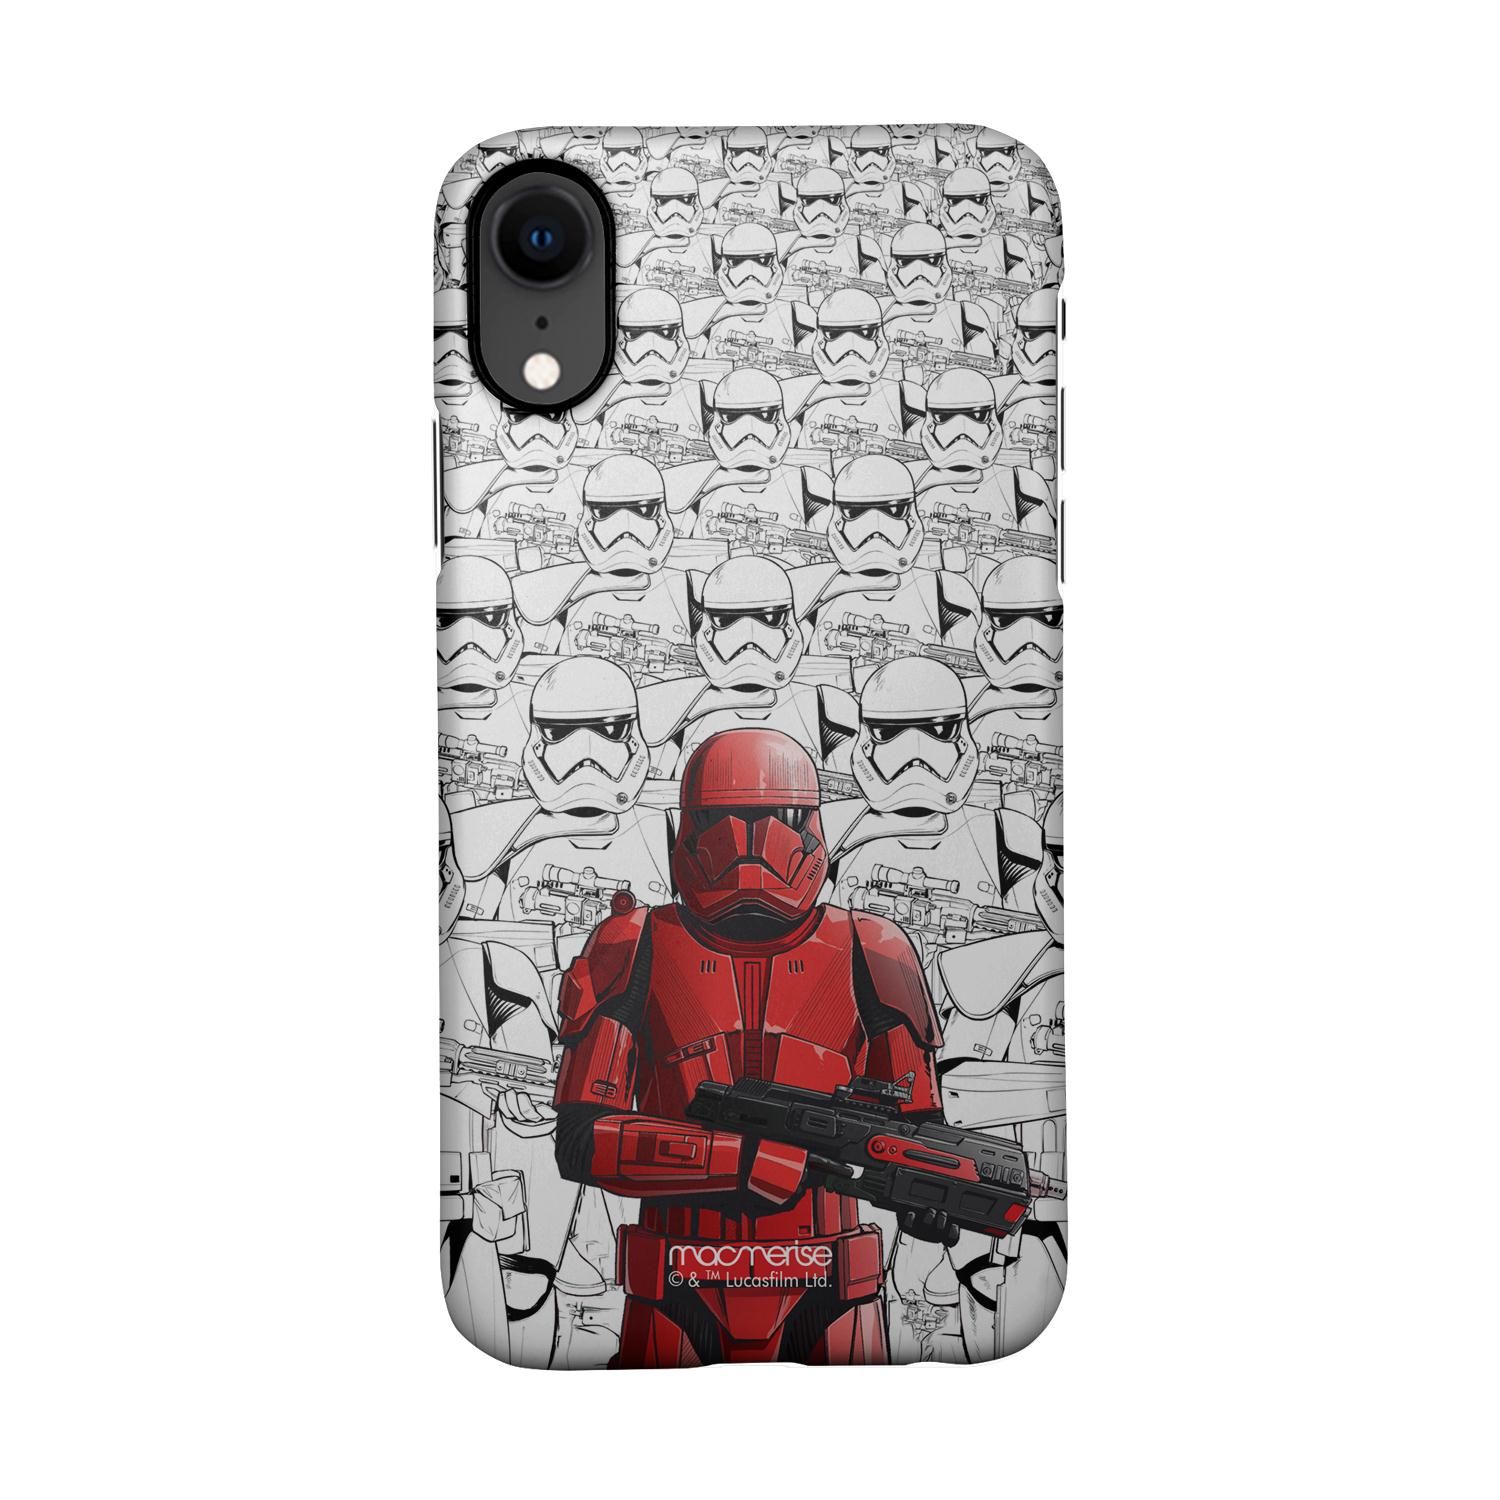 Buy Sith Troopers - Sleek Phone Case for iPhone XR Online